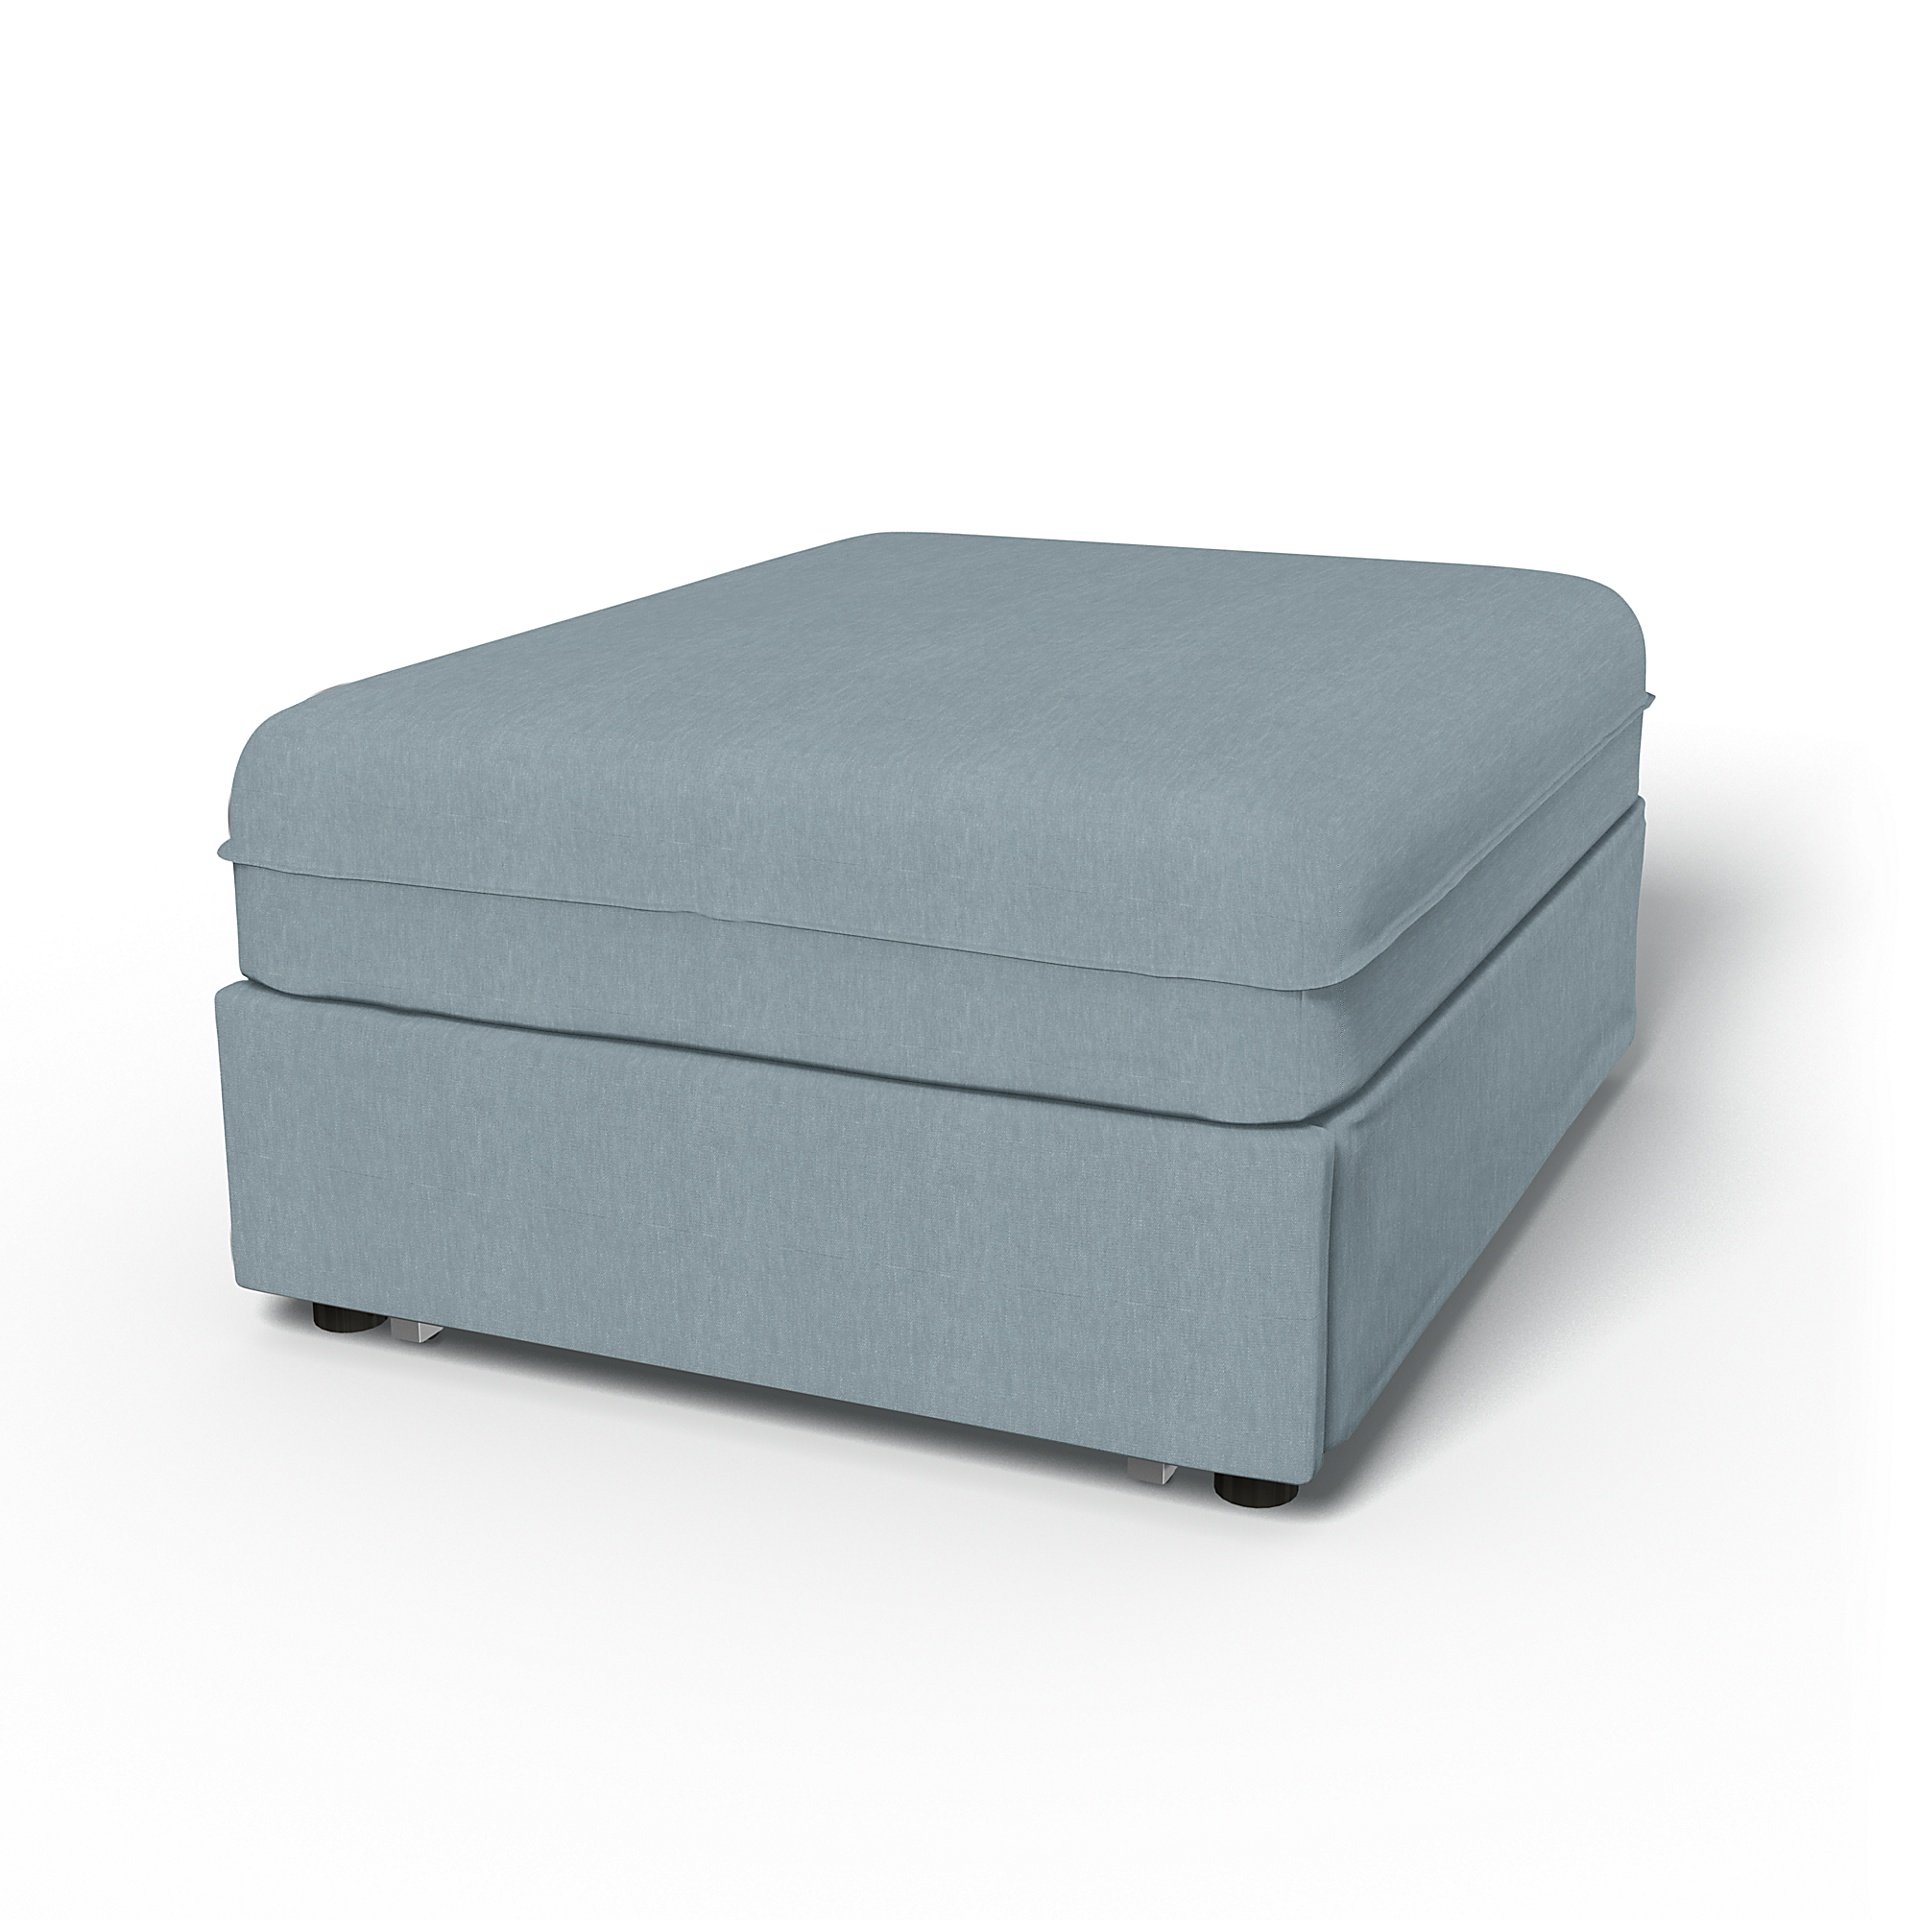 IKEA - Vallentuna Seat Module with Sofa Bed Cover 80x100cm 32x39in, Dusty Blue, Linen - Bemz